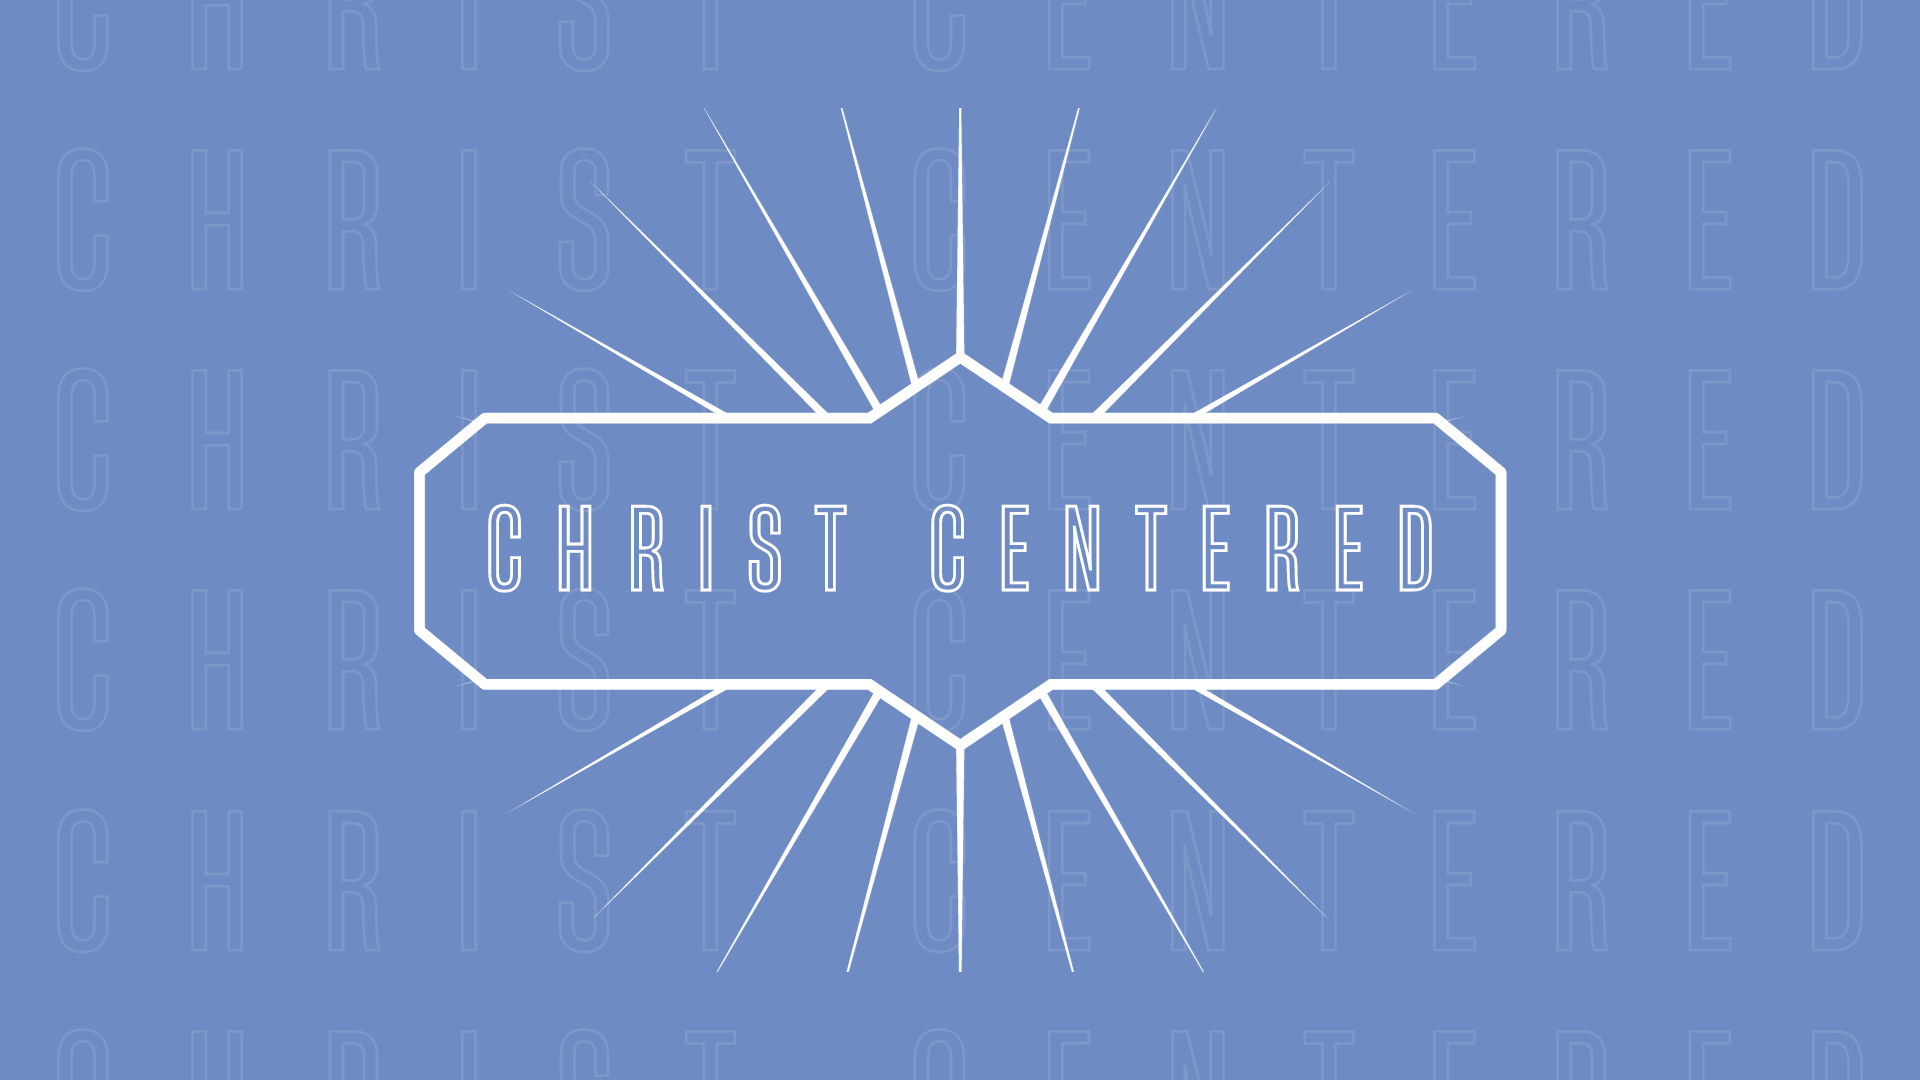 Christ Centered Finances